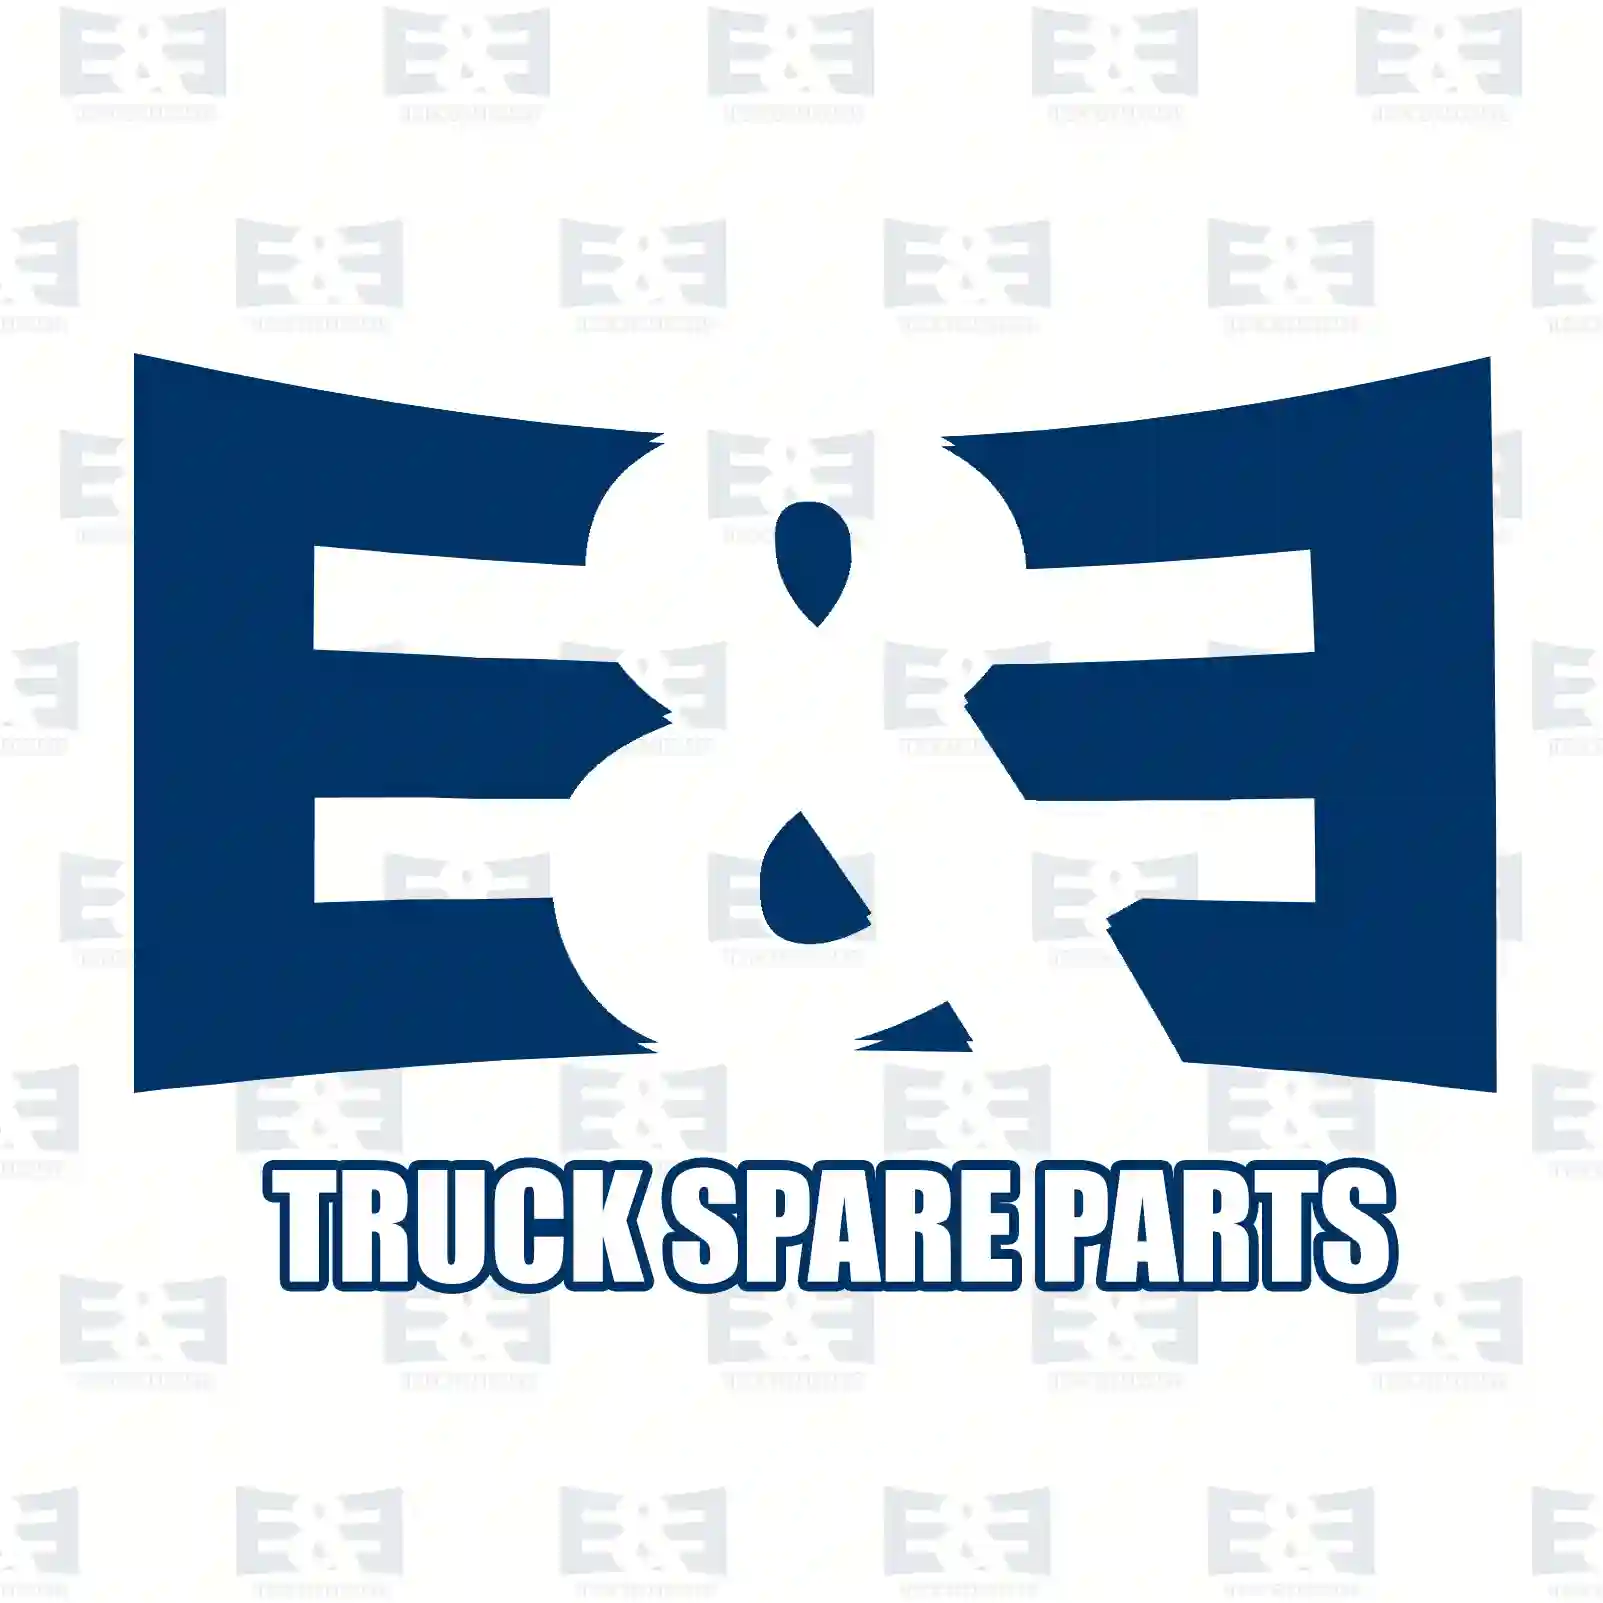  Turbocharger, reman. / without old core || E&E Truck Spare Parts | Truck Spare Parts, Auotomotive Spare Parts